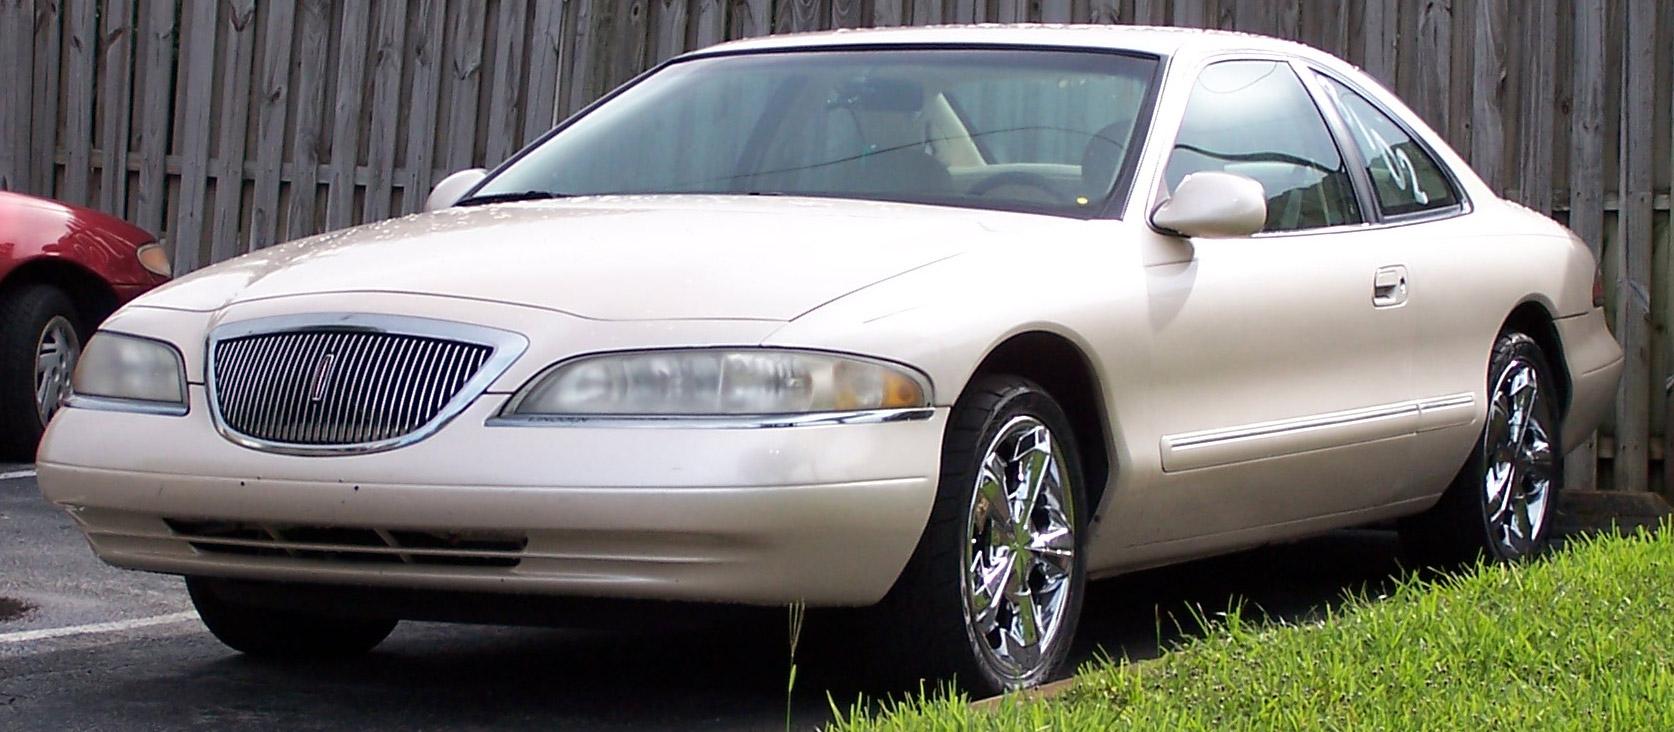  1998 Lincoln Mark VIII Base Model